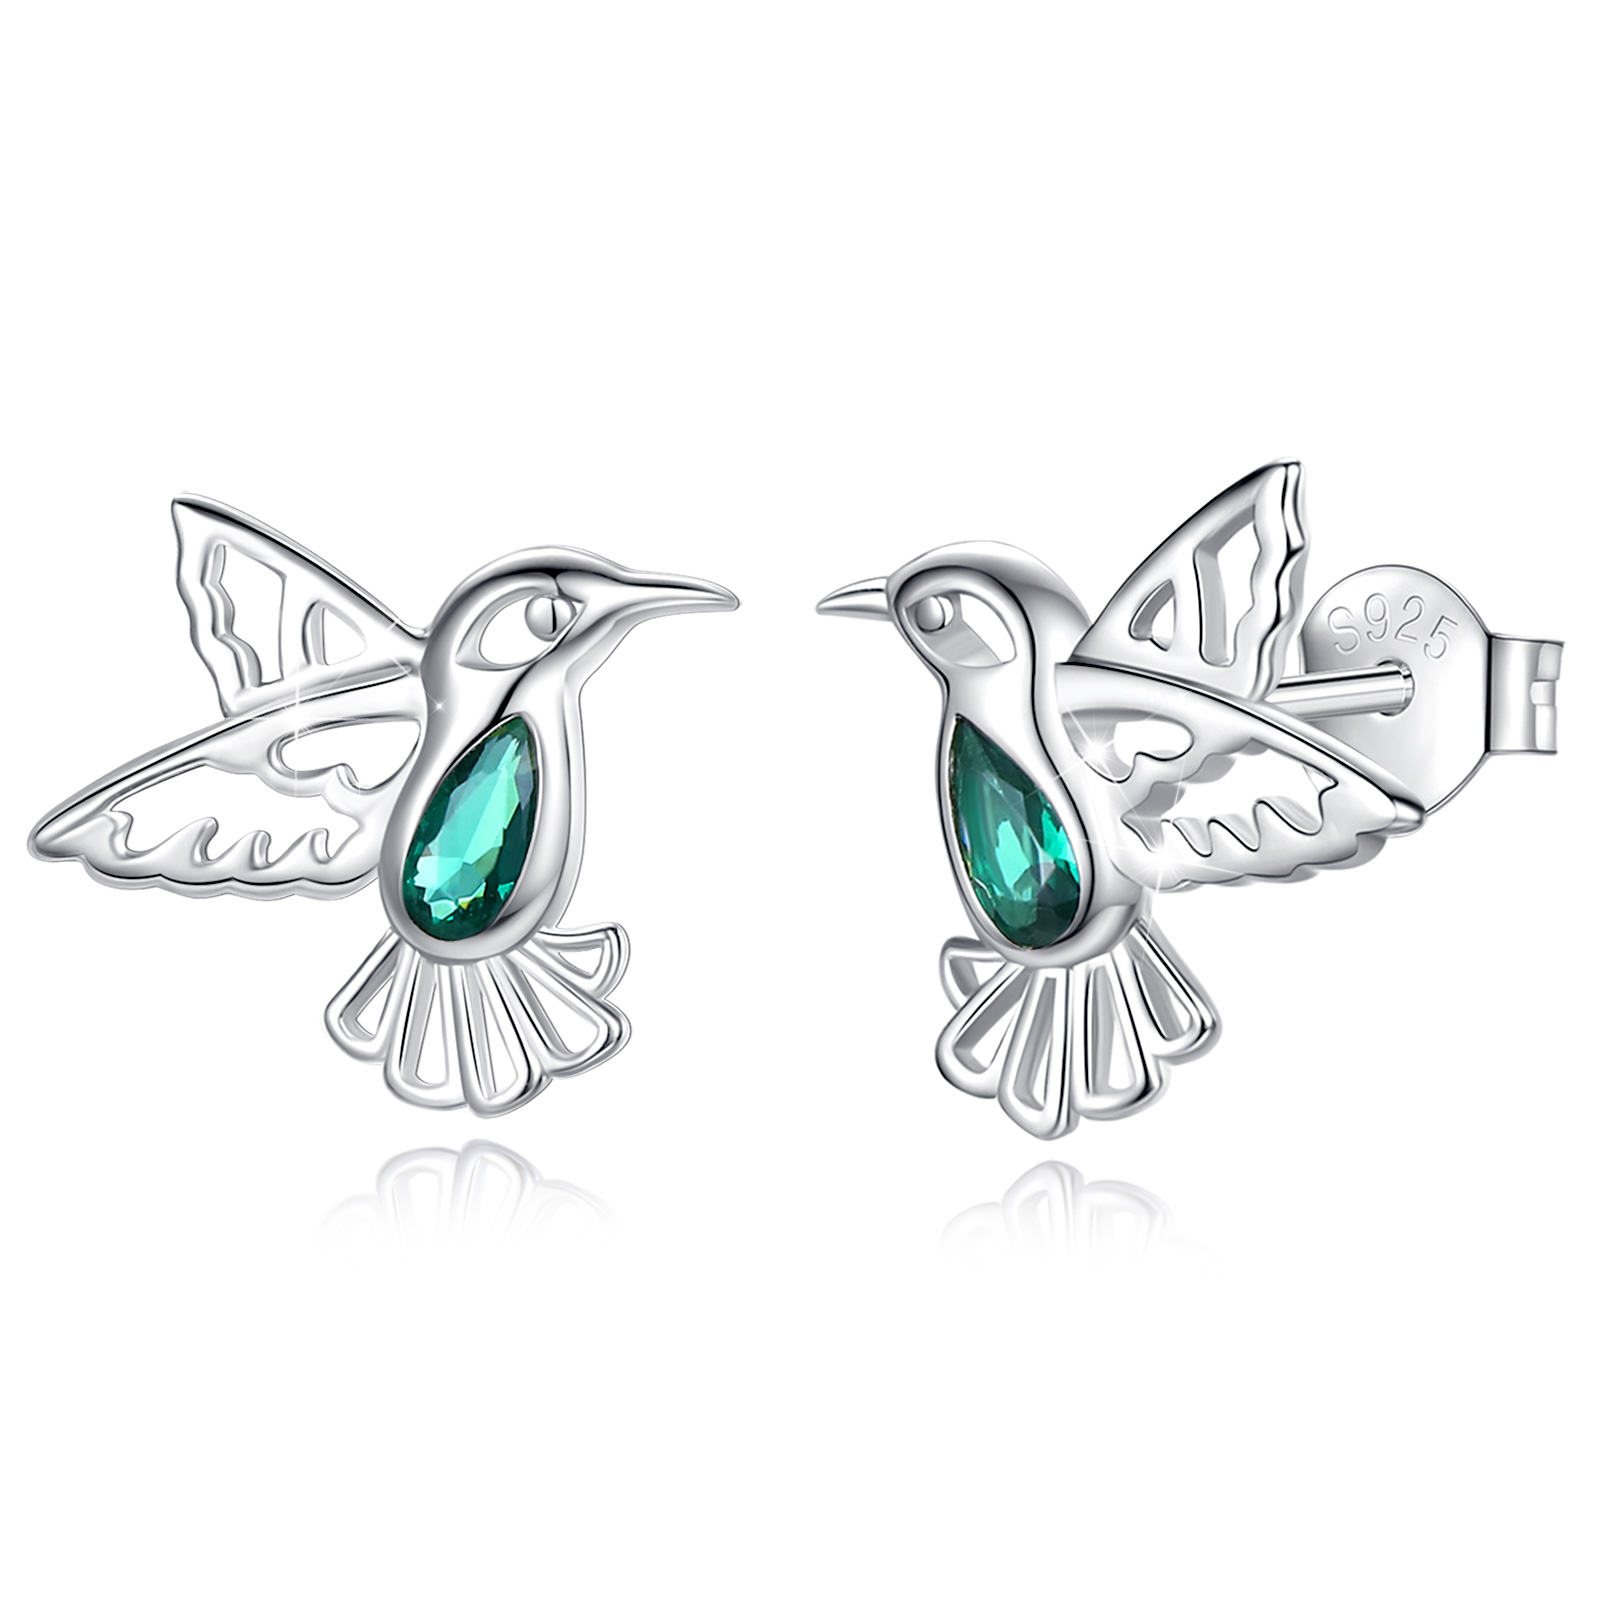 Merryshine 925 Sterling Silver Green Cubic Zirconia Flying Hummingbird Stud Earrings for Women